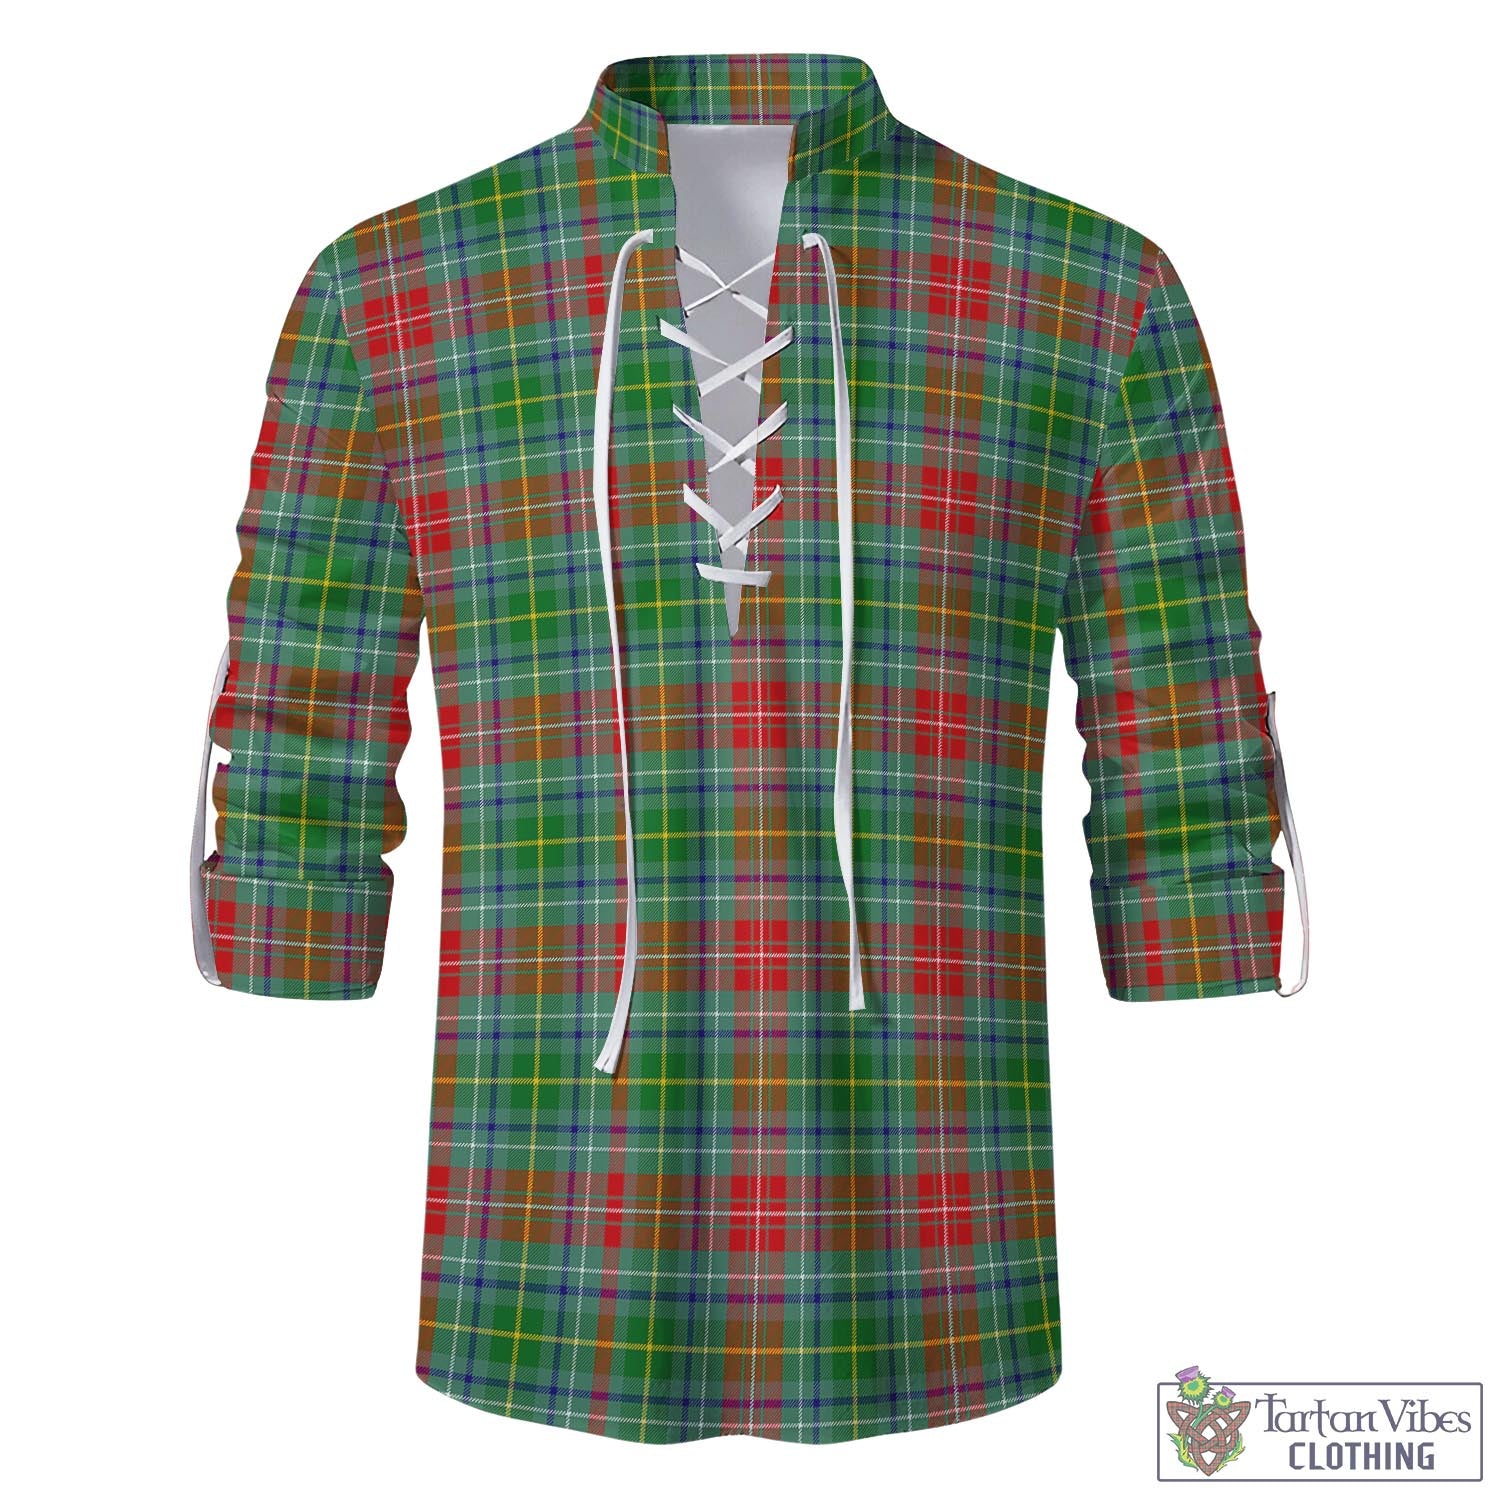 Tartan Vibes Clothing Muirhead Tartan Men's Scottish Traditional Jacobite Ghillie Kilt Shirt